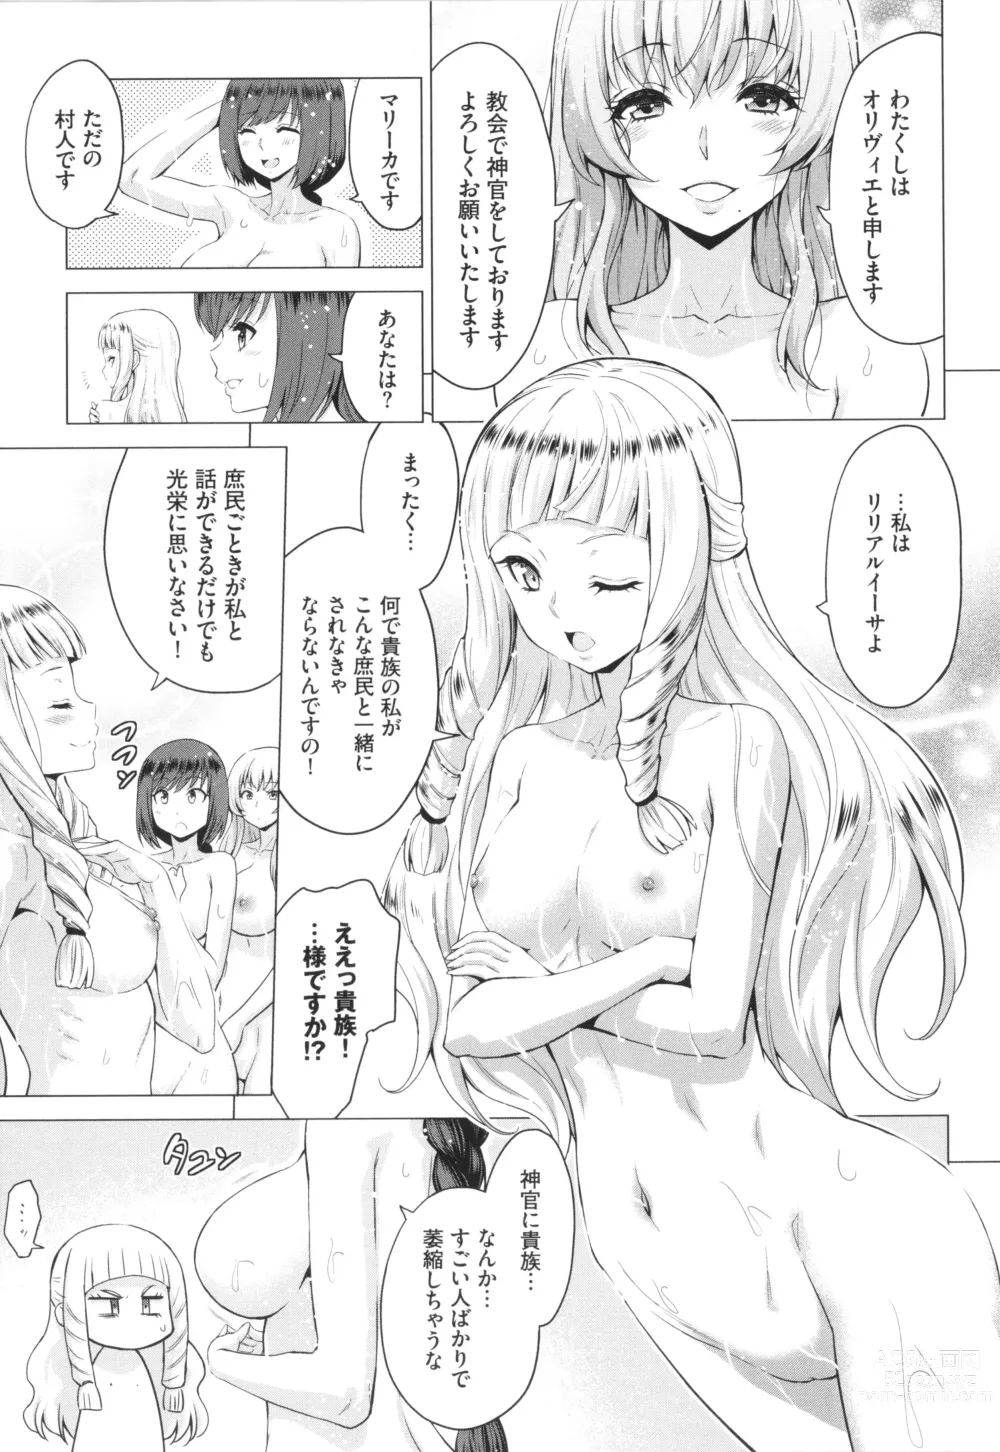 Page 14 of manga Seijo no Rakuin -Annunciation of despair-